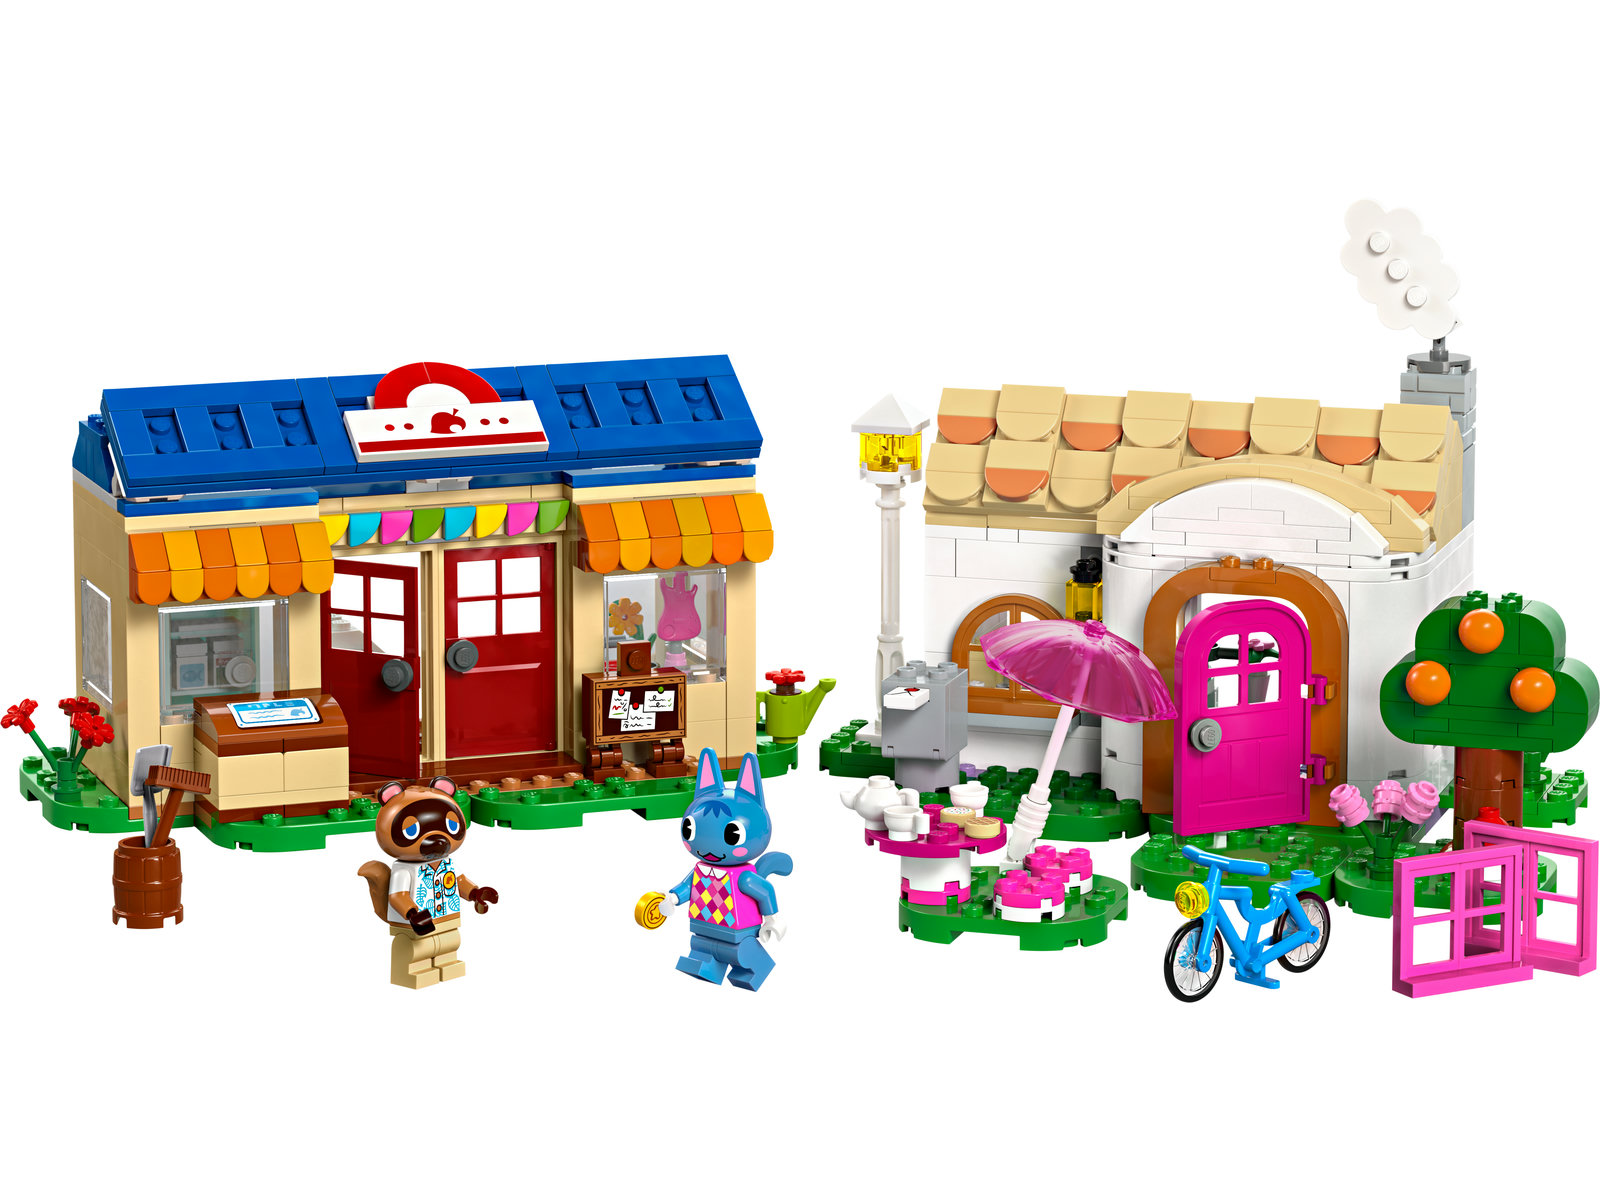 LEGO® Animal Crossing 77050 - Nooks Laden und Sophies Haus